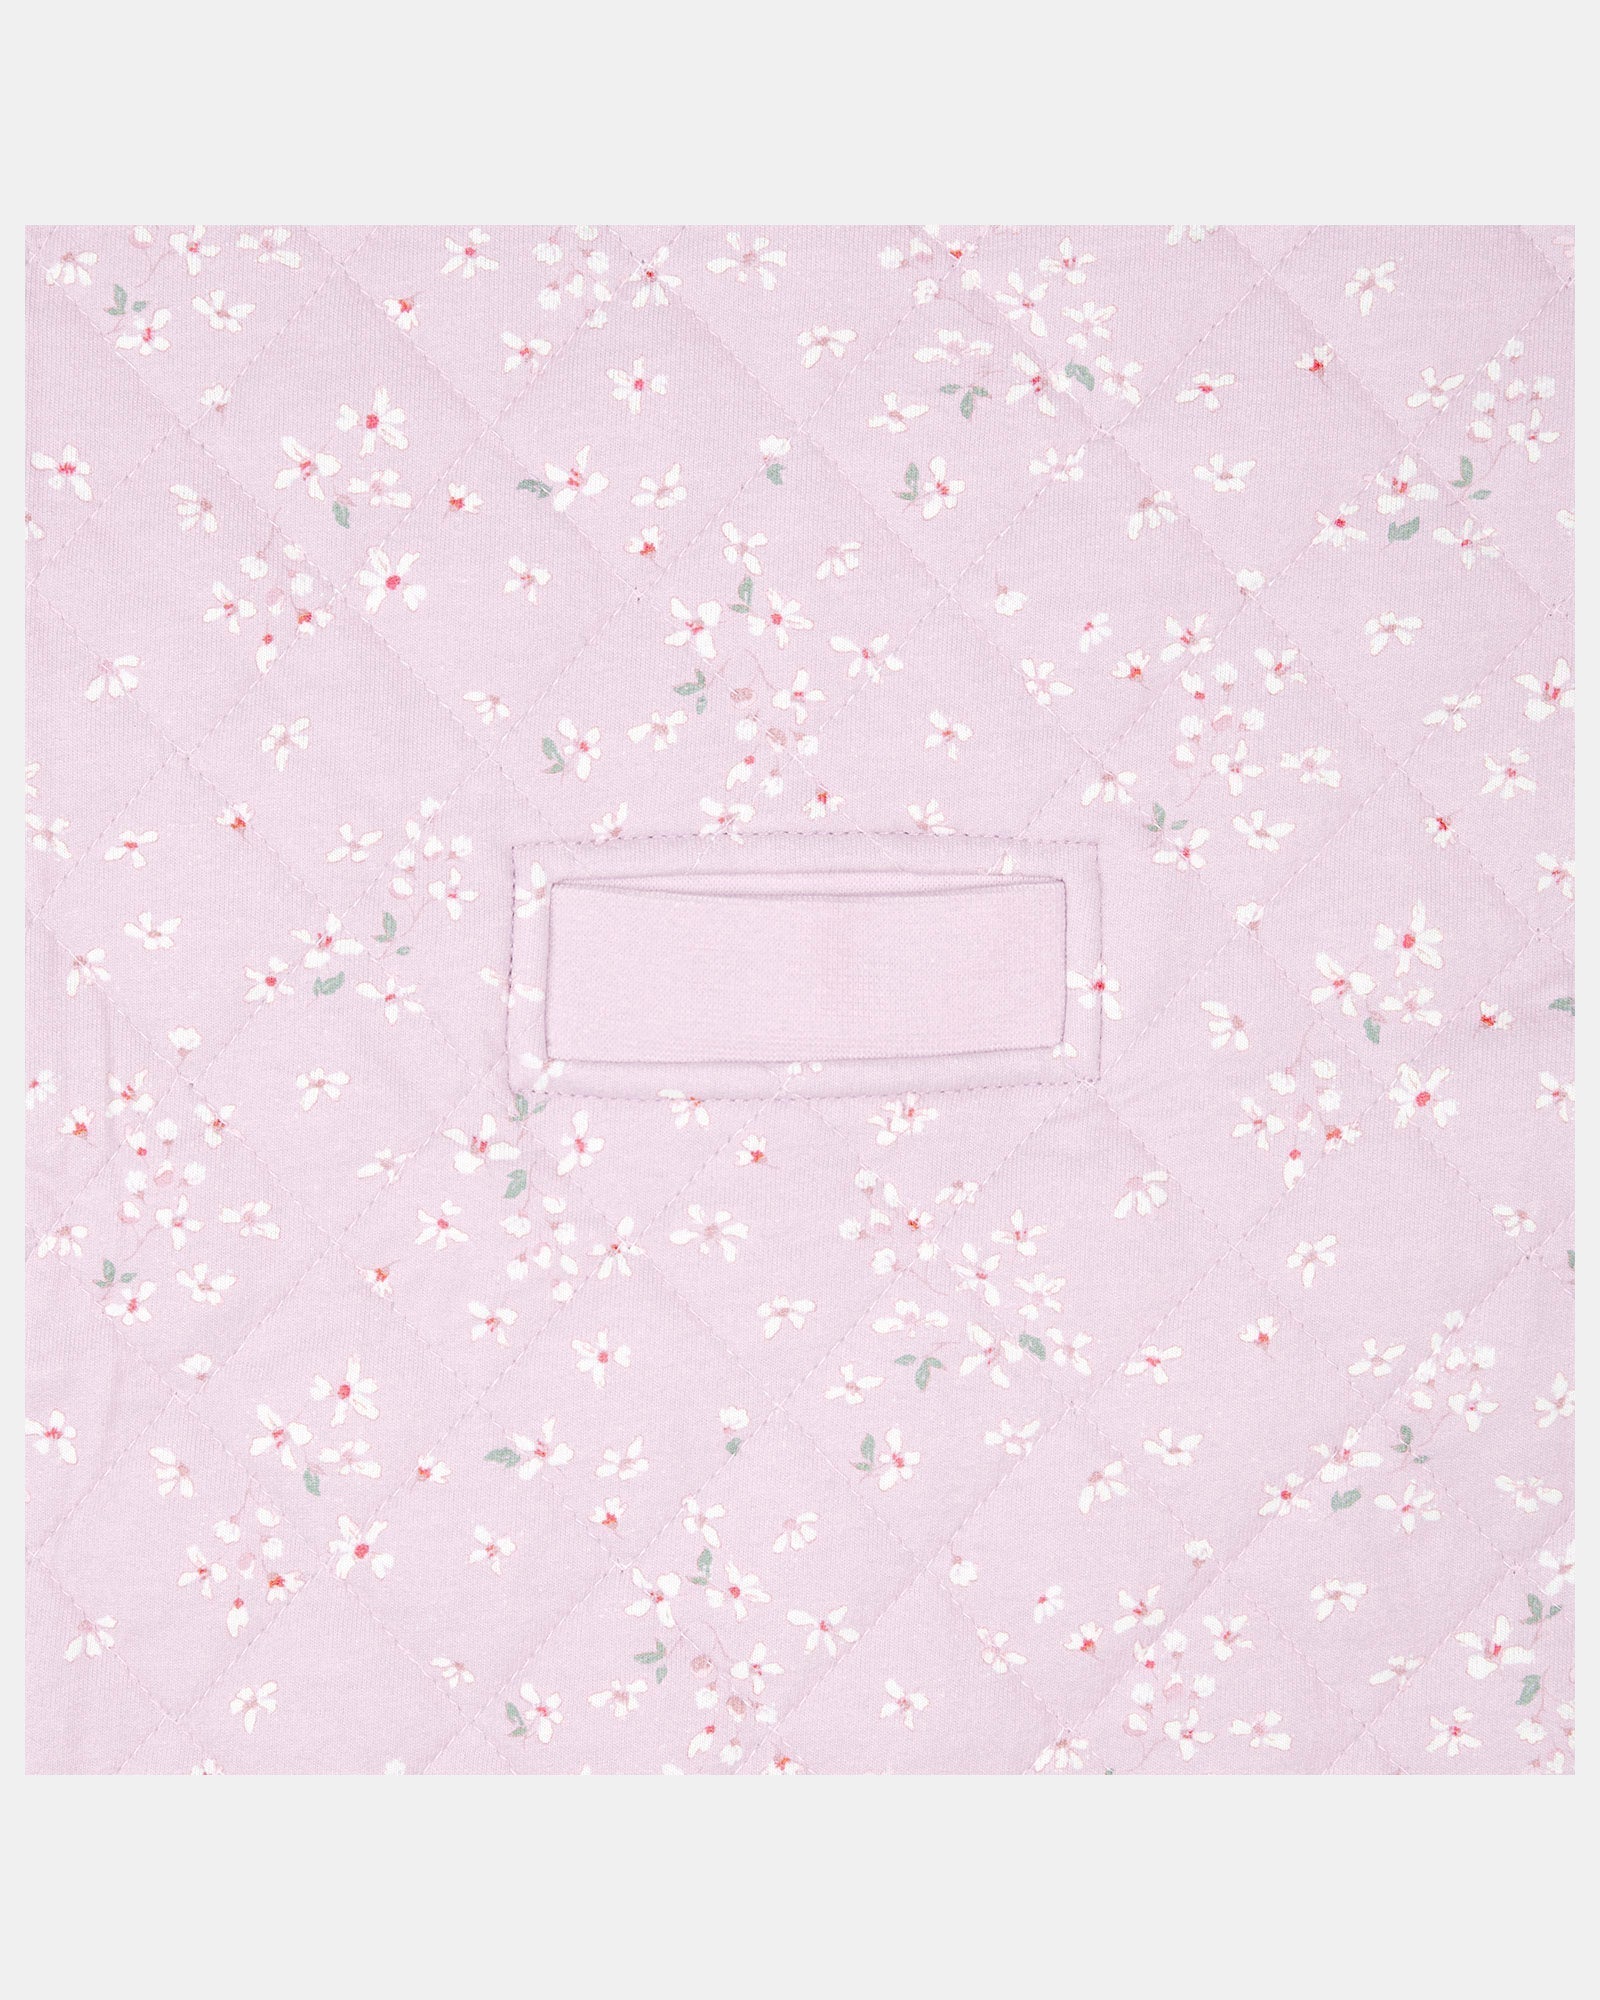 Baby Sleep Bag Classic Sleeveless 1 TOG - Nina Lavender-Nursery & Nurture-Toshi-The Bay Room